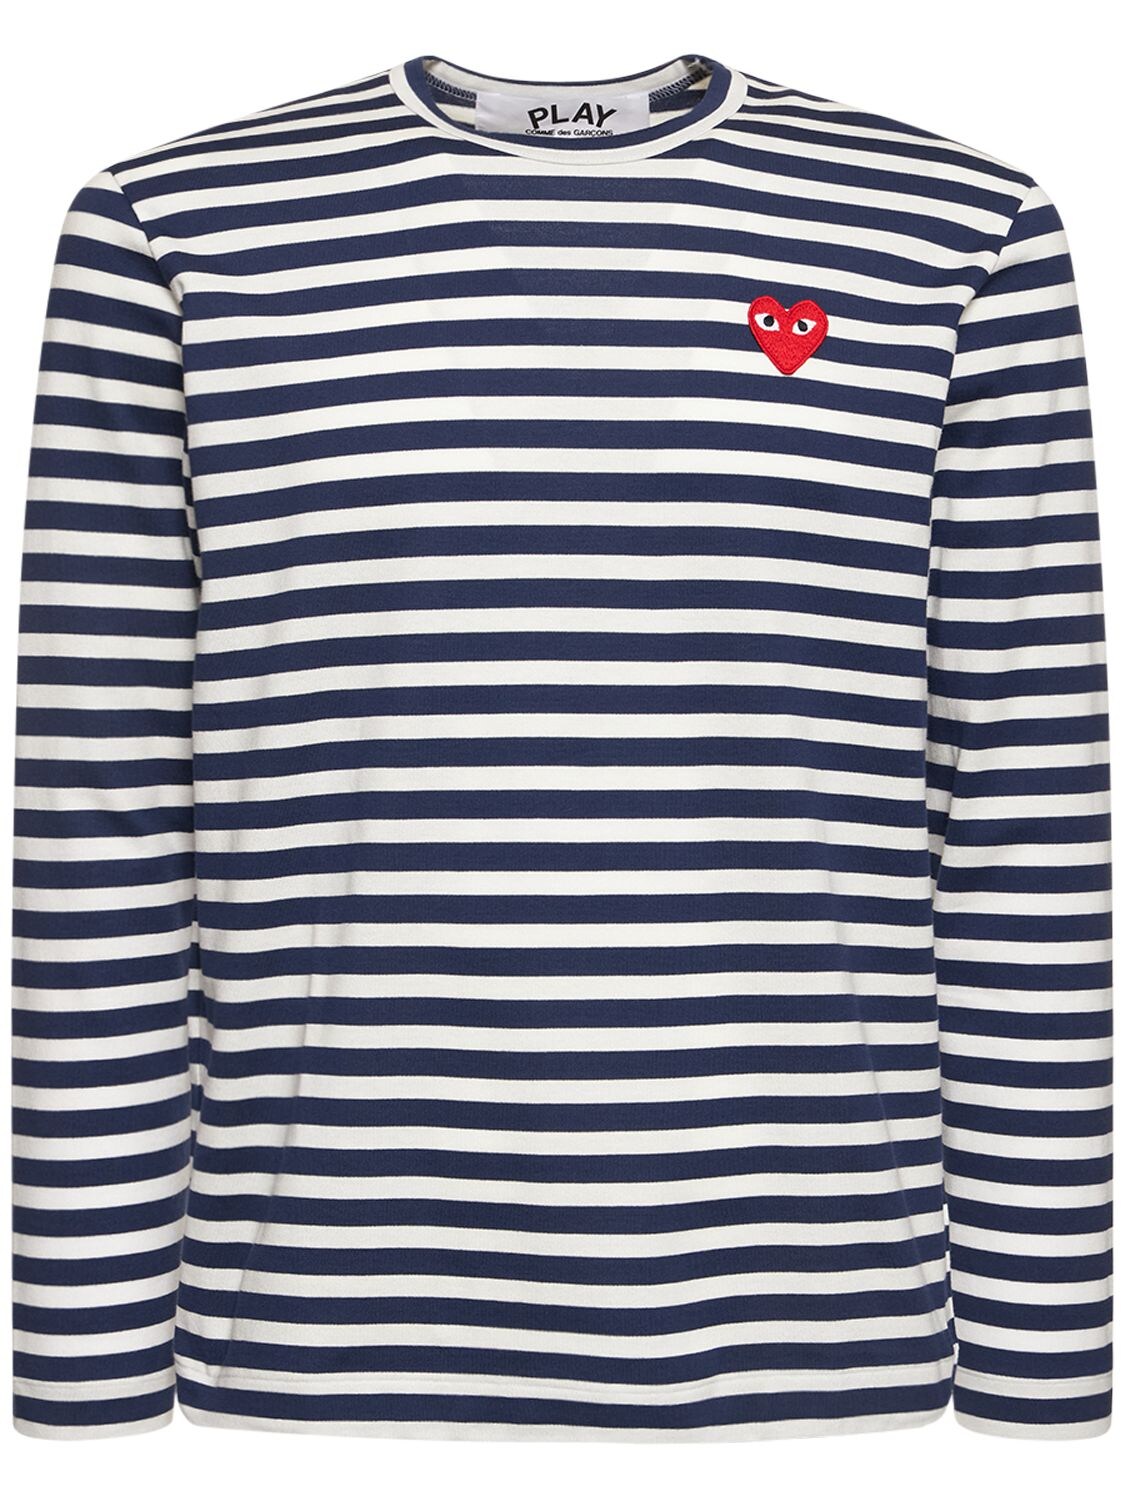 Buy Comme des Garçons PLAY Striped Long-Sleeve T-Shirt 'Navy/White